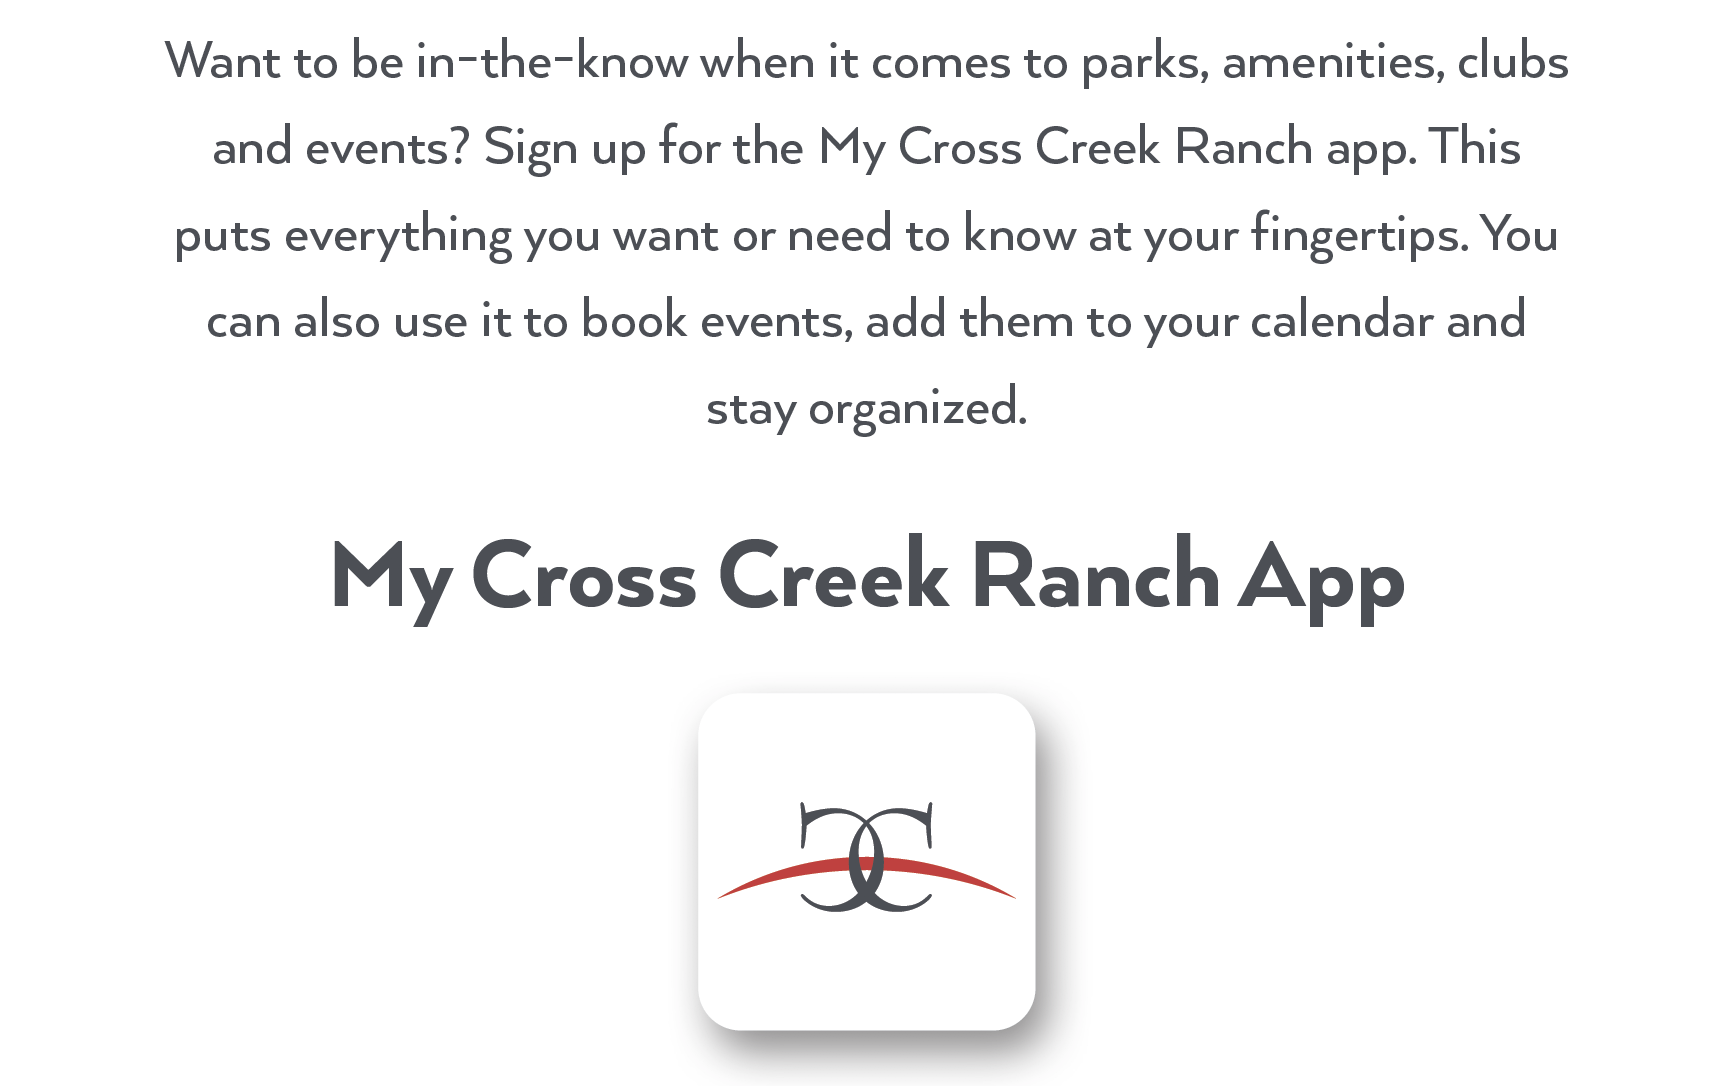 Cross Creek Ranch App Instructions